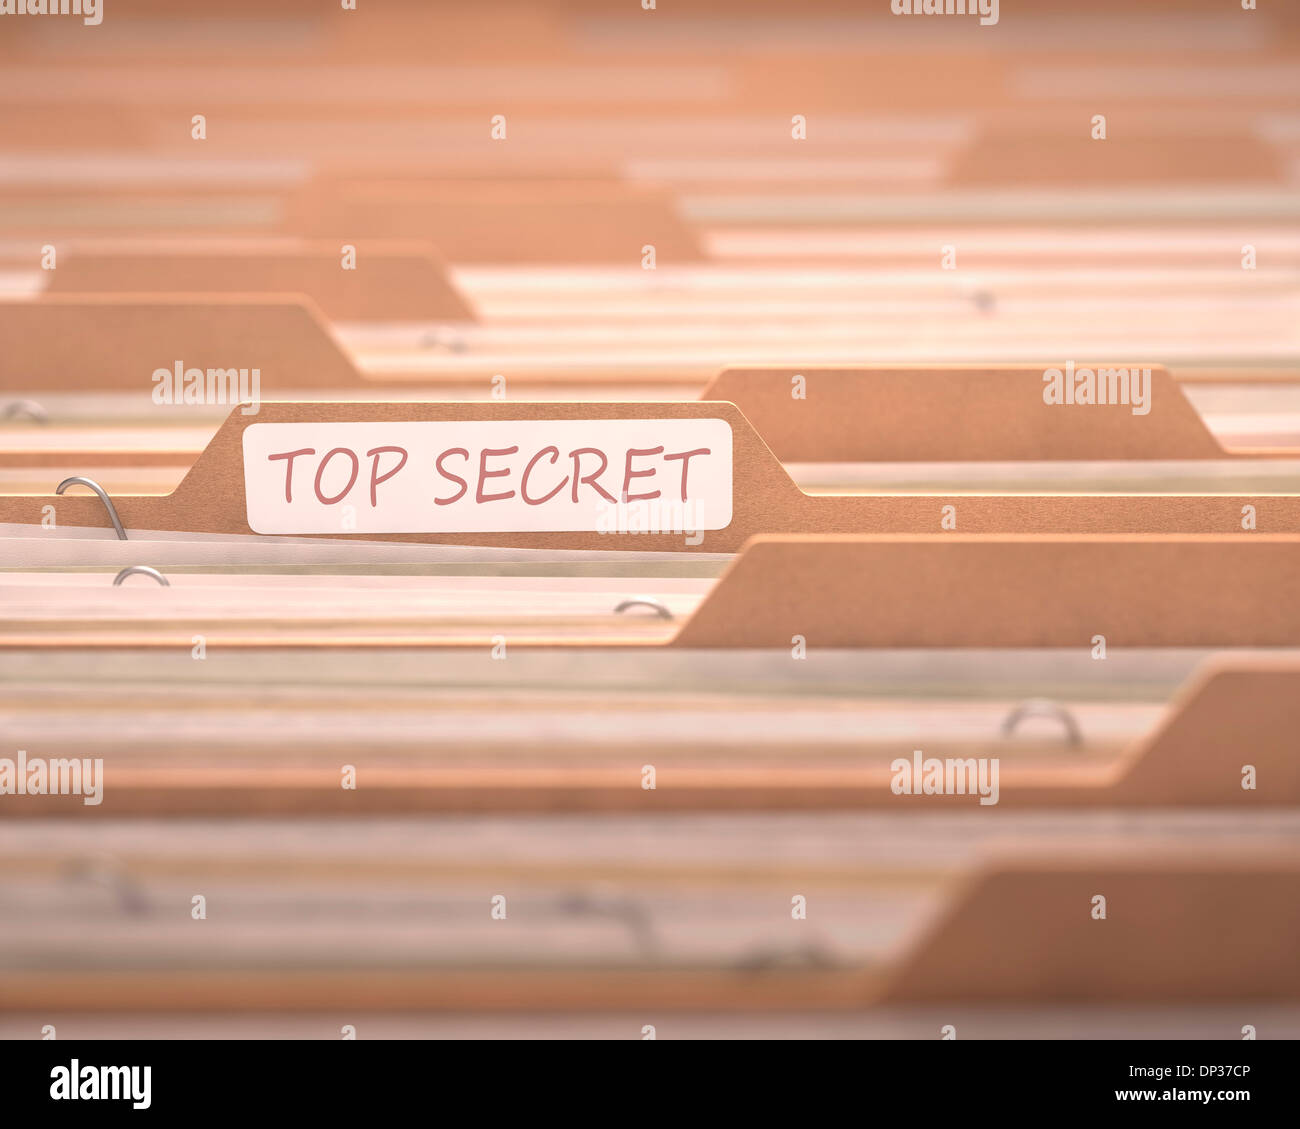 Top Secret Files, ilustraciones Foto de stock